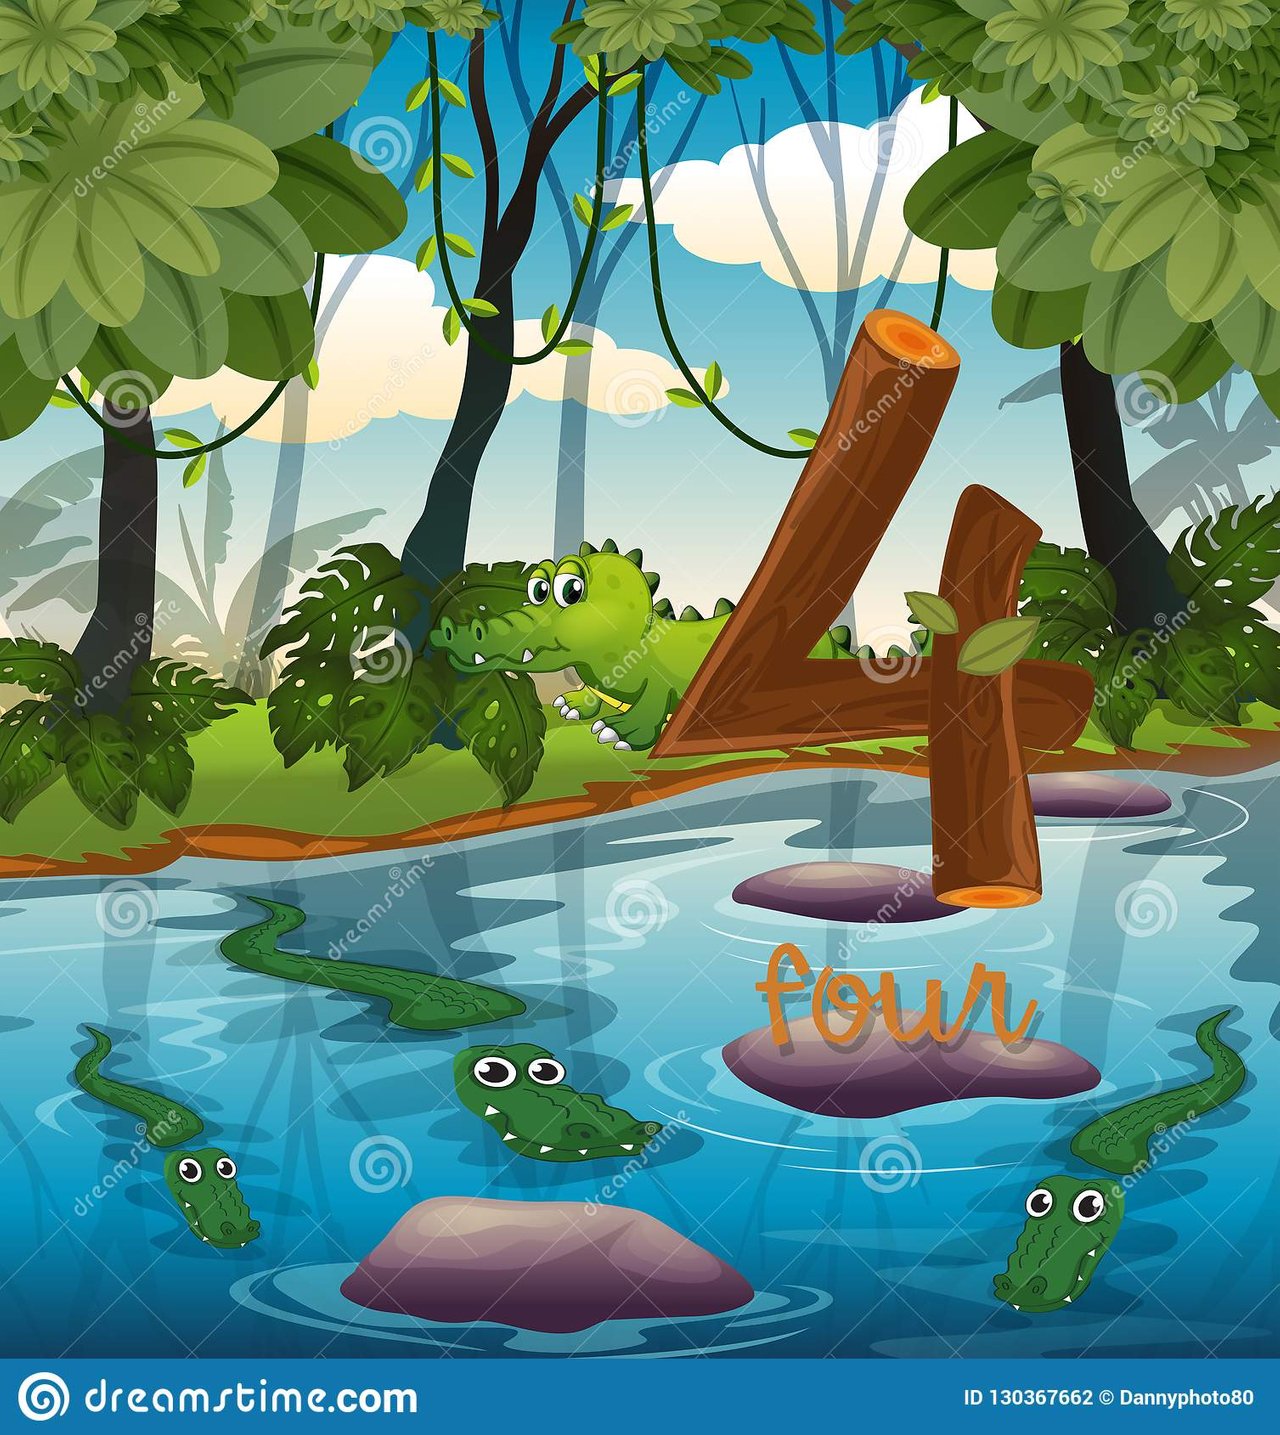 four-crocodile-pond-illustration-130367662.jpg